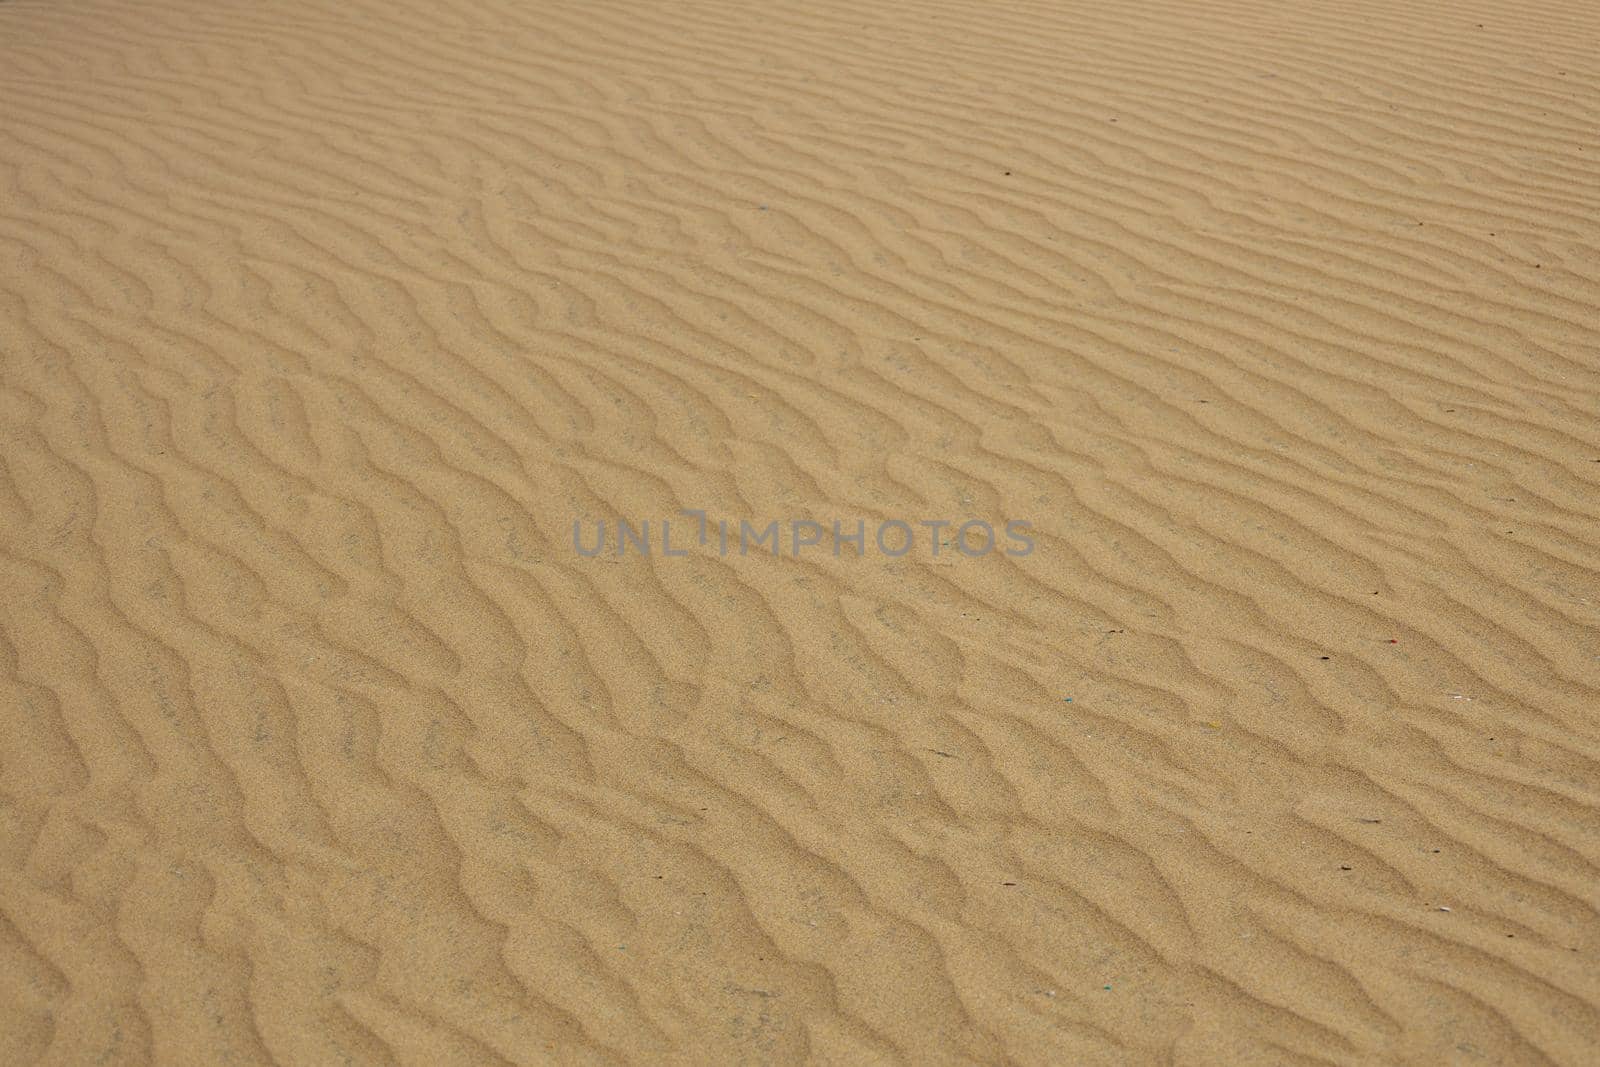 Gran Canaria dunes - Maspalomas sand desert. High-quality photo